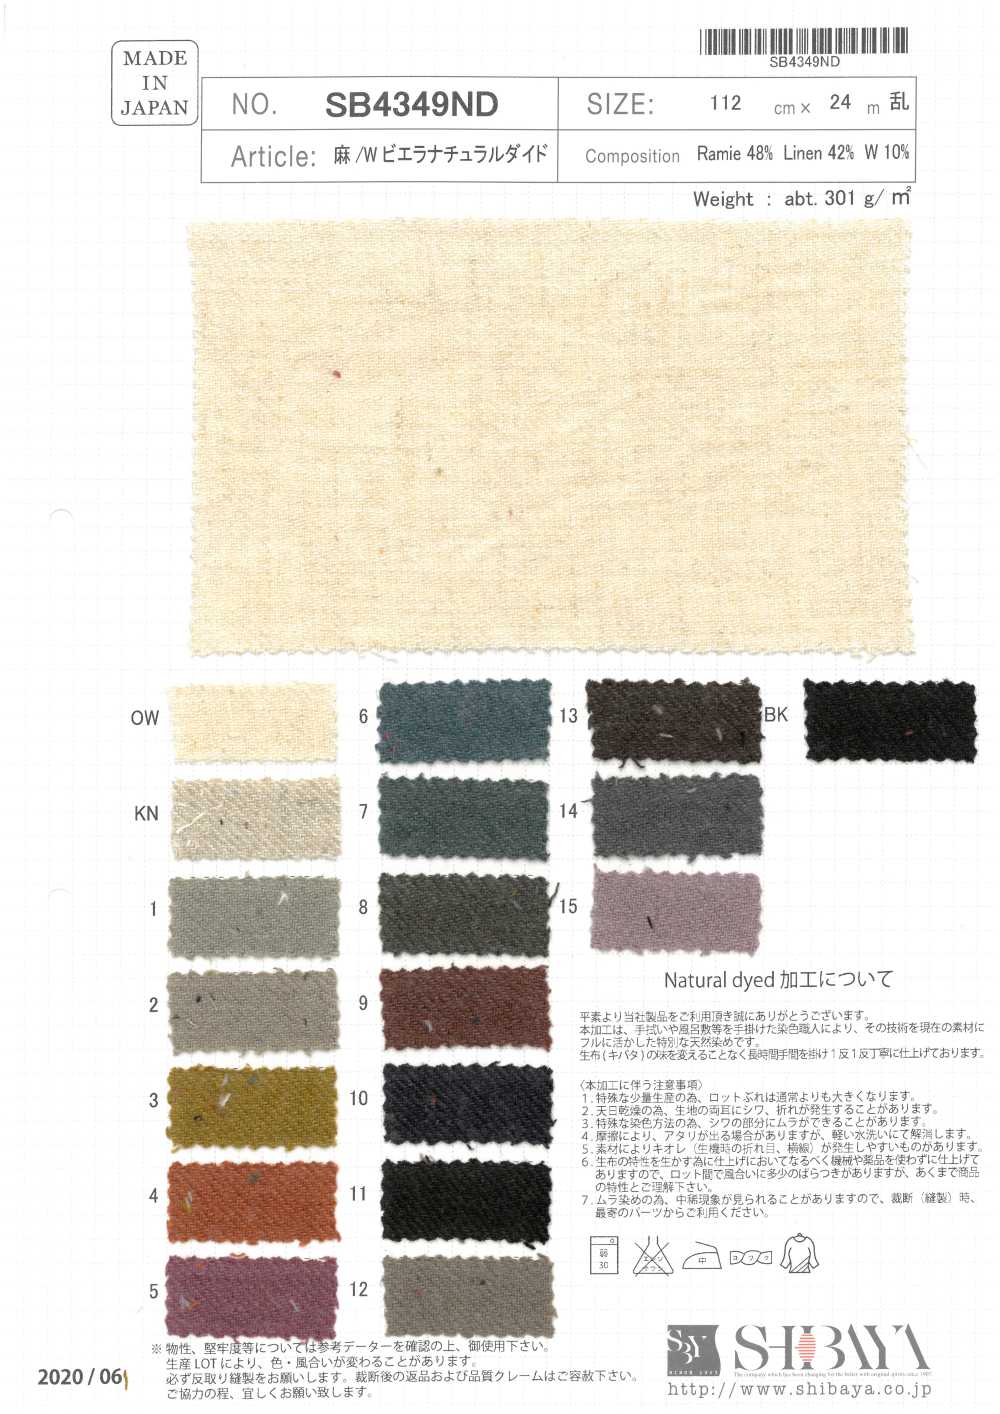 SB4349ND Linho/ Viyella Tingido Natural[Têxtil / Tecido] SHIBAYA